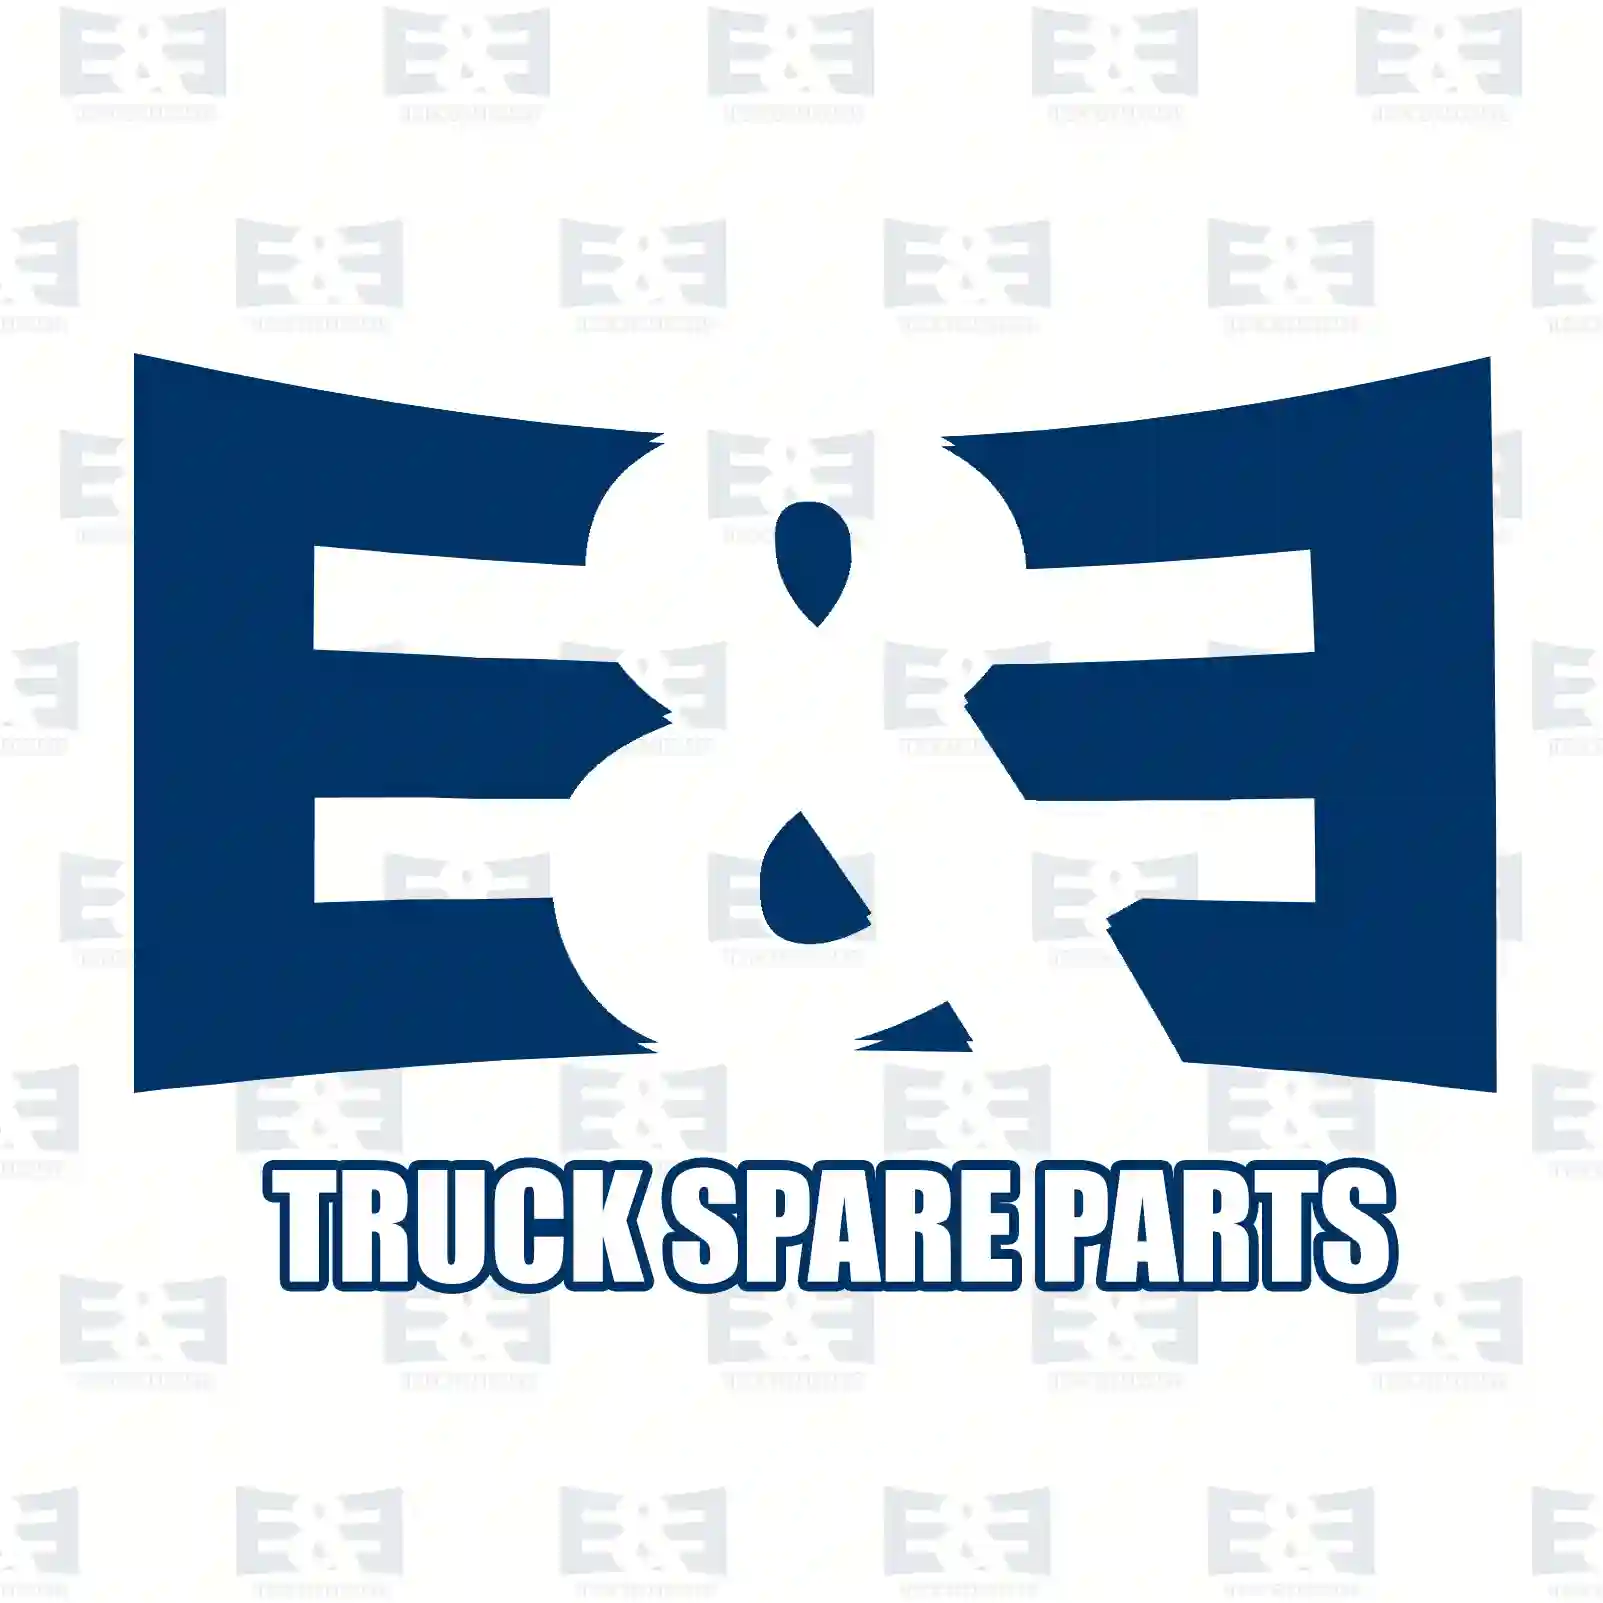 Engine mounting, 2E2277396, 2222212, 2592762 ||  2E2277396 E&E Truck Spare Parts | Truck Spare Parts, Auotomotive Spare Parts Engine mounting, 2E2277396, 2222212, 2592762 ||  2E2277396 E&E Truck Spare Parts | Truck Spare Parts, Auotomotive Spare Parts